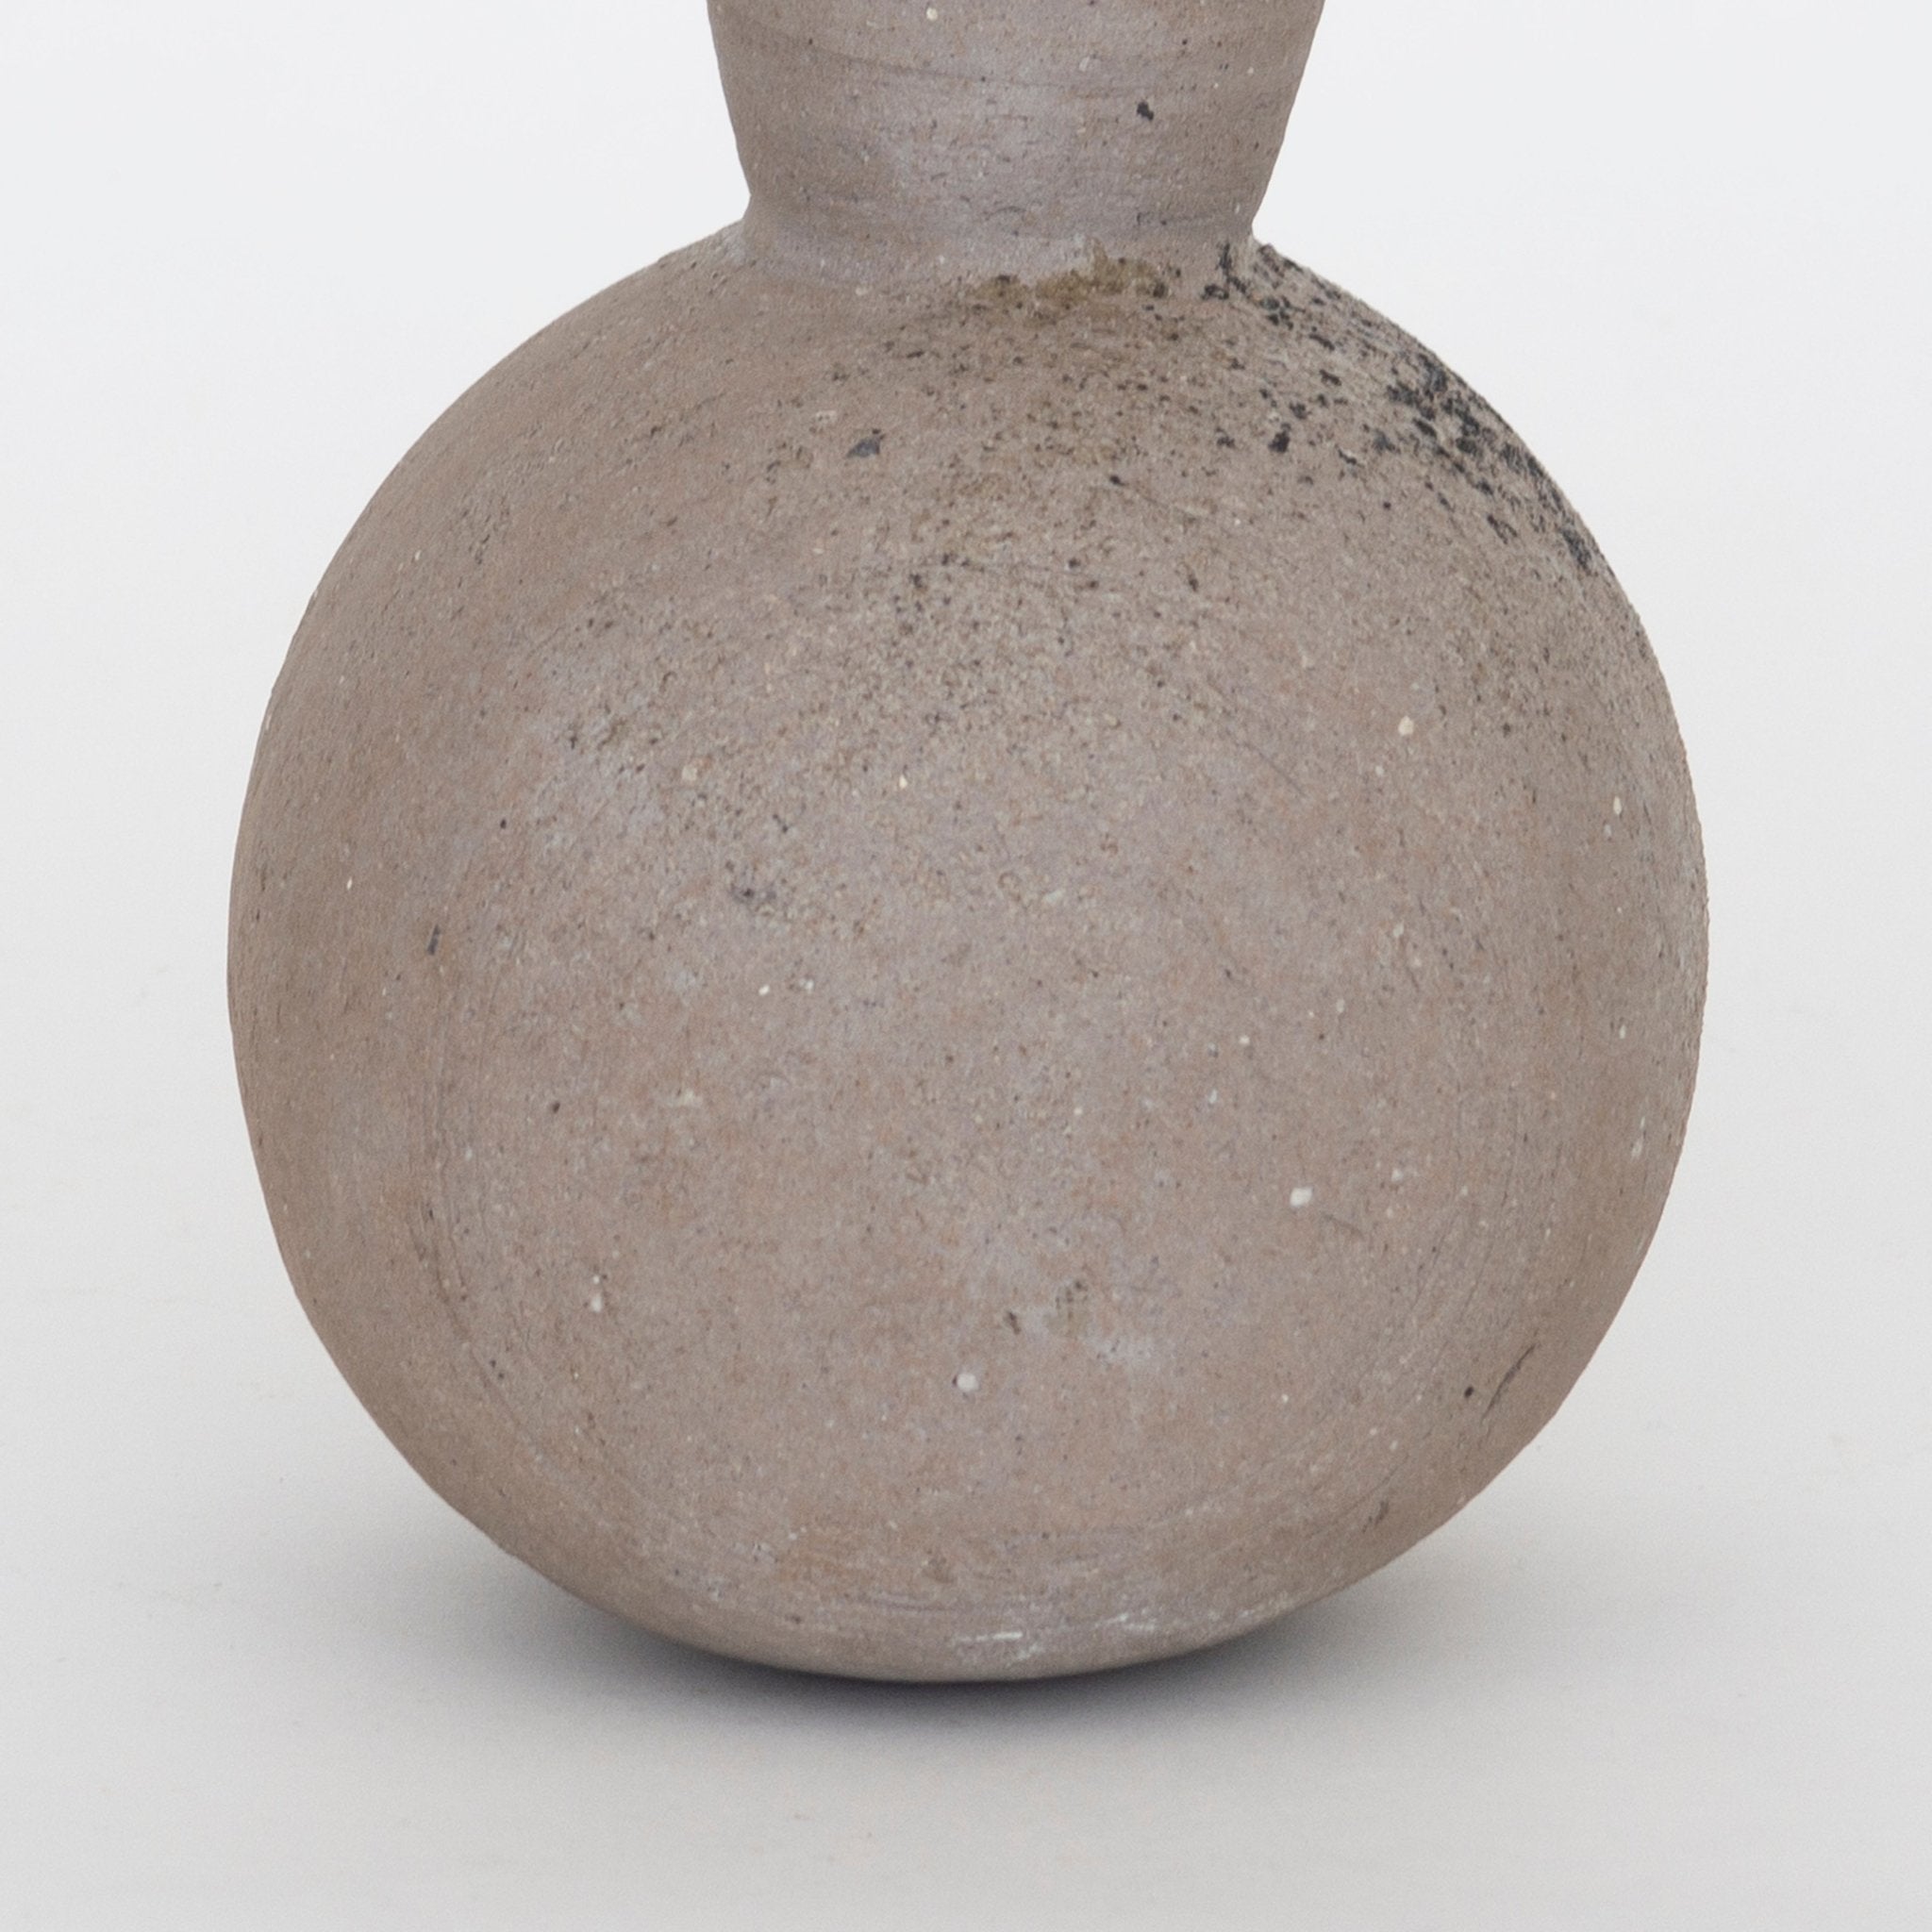 087 Unknown, Japan Ceramic Object | Tortoise General Store